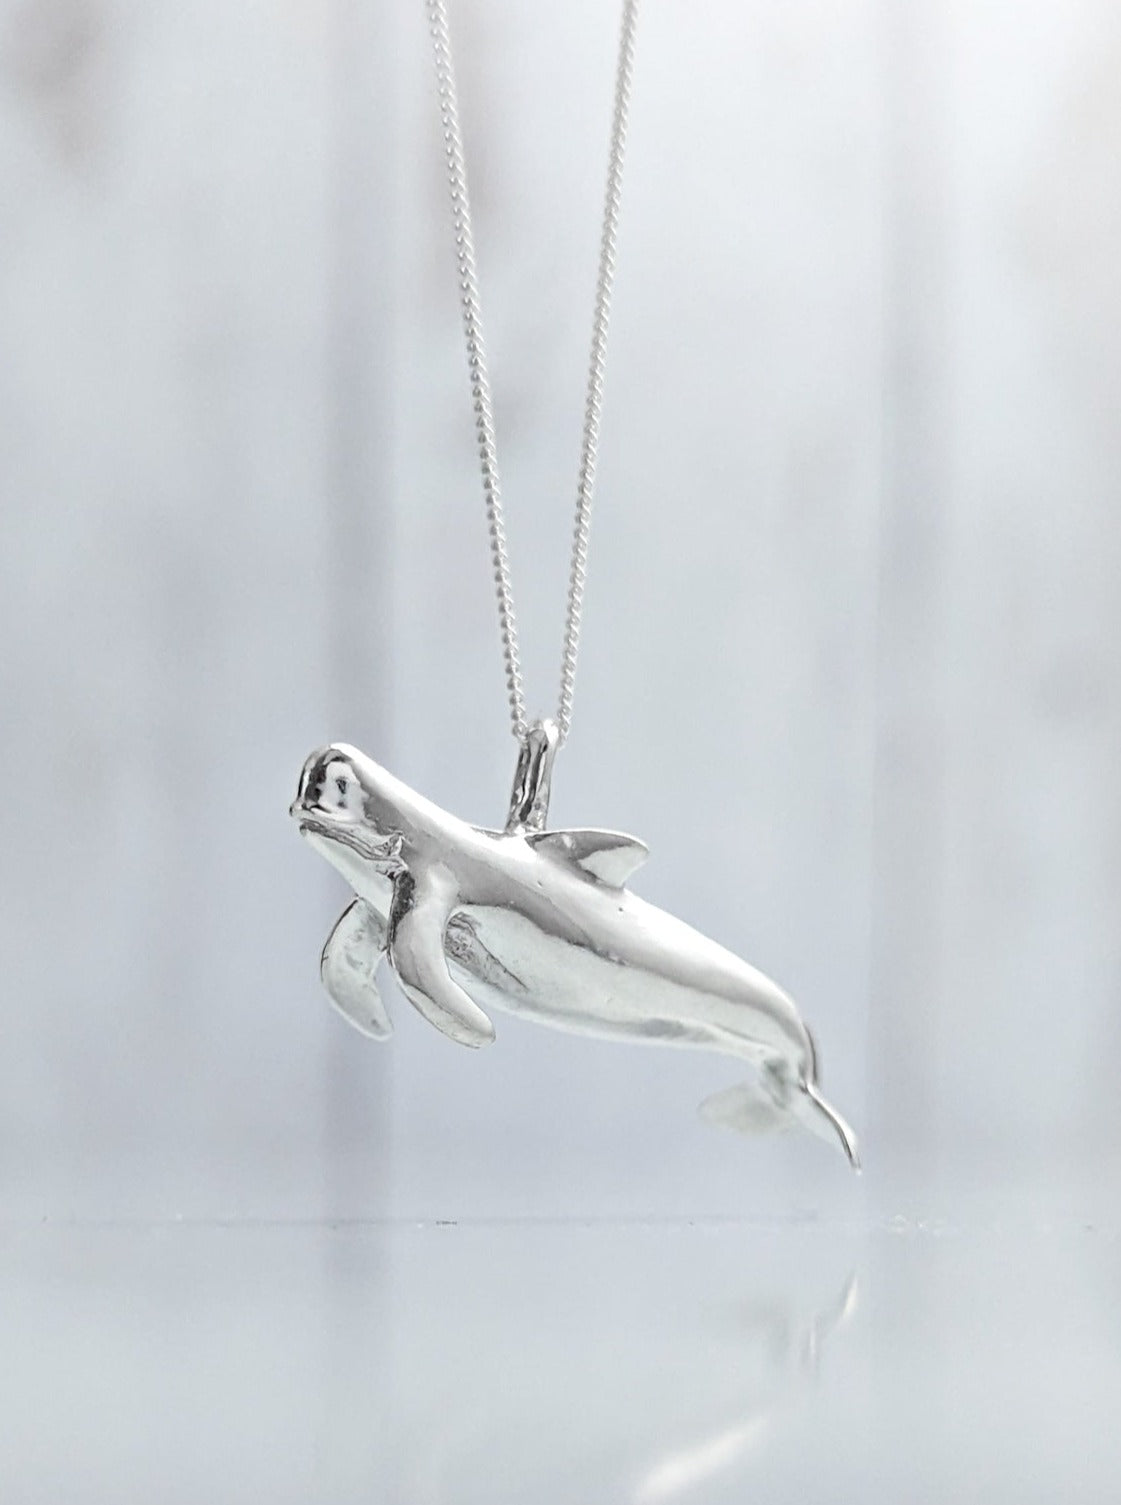 Realistic silver pilot whale necklace